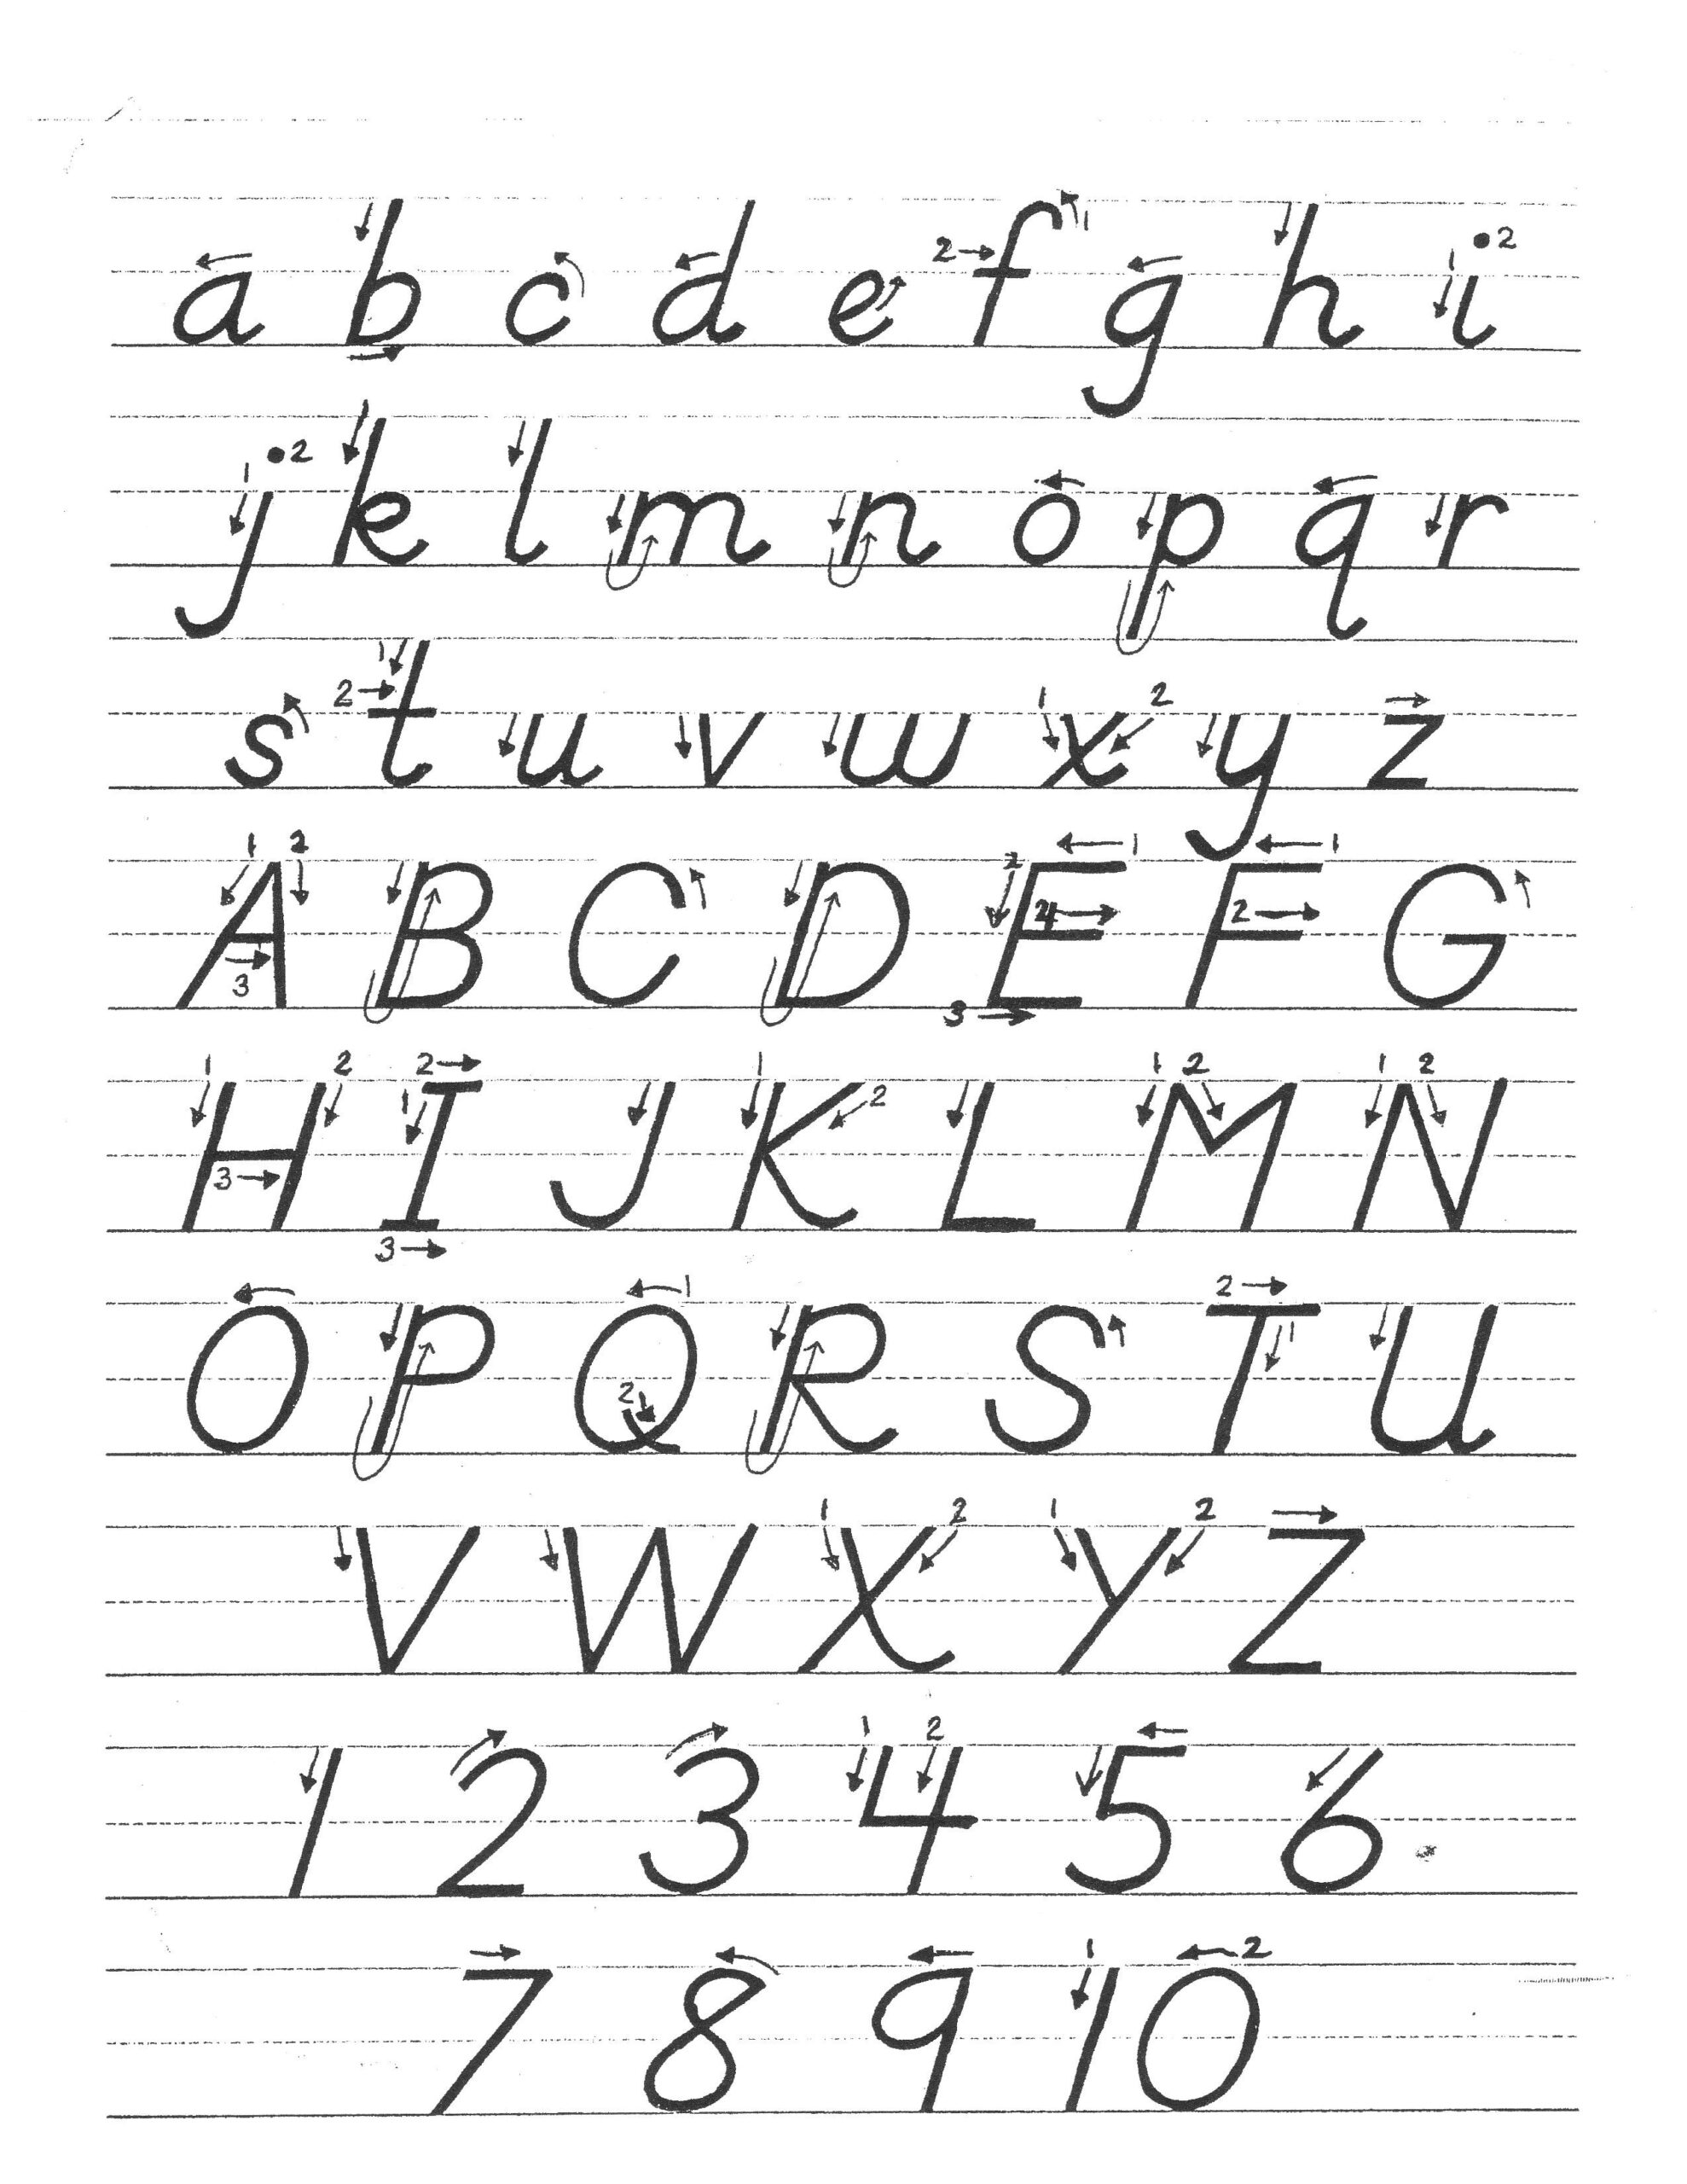 Image Result For D nealian Handwriting Educacion